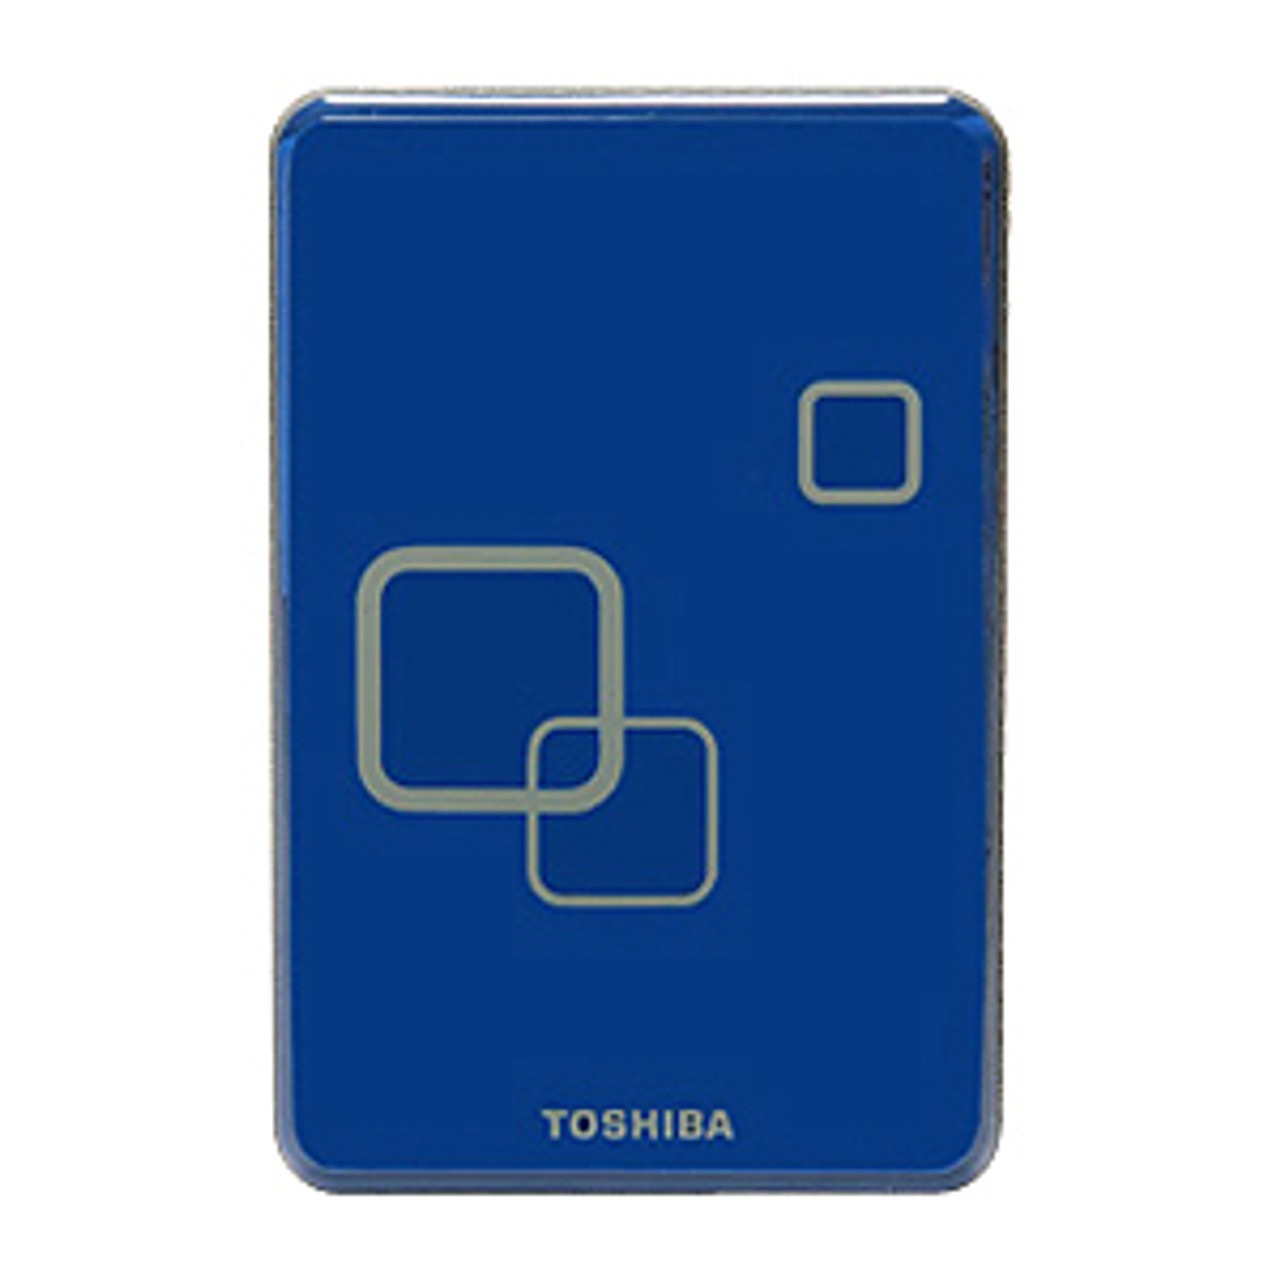 E05A100PBU2XL - Toshiba Canvio E05A100PBU2XL 1 TB External Hard Drive - Liquid Blue - USB 2.0 - 5400 rpm - 8 MB Buffer